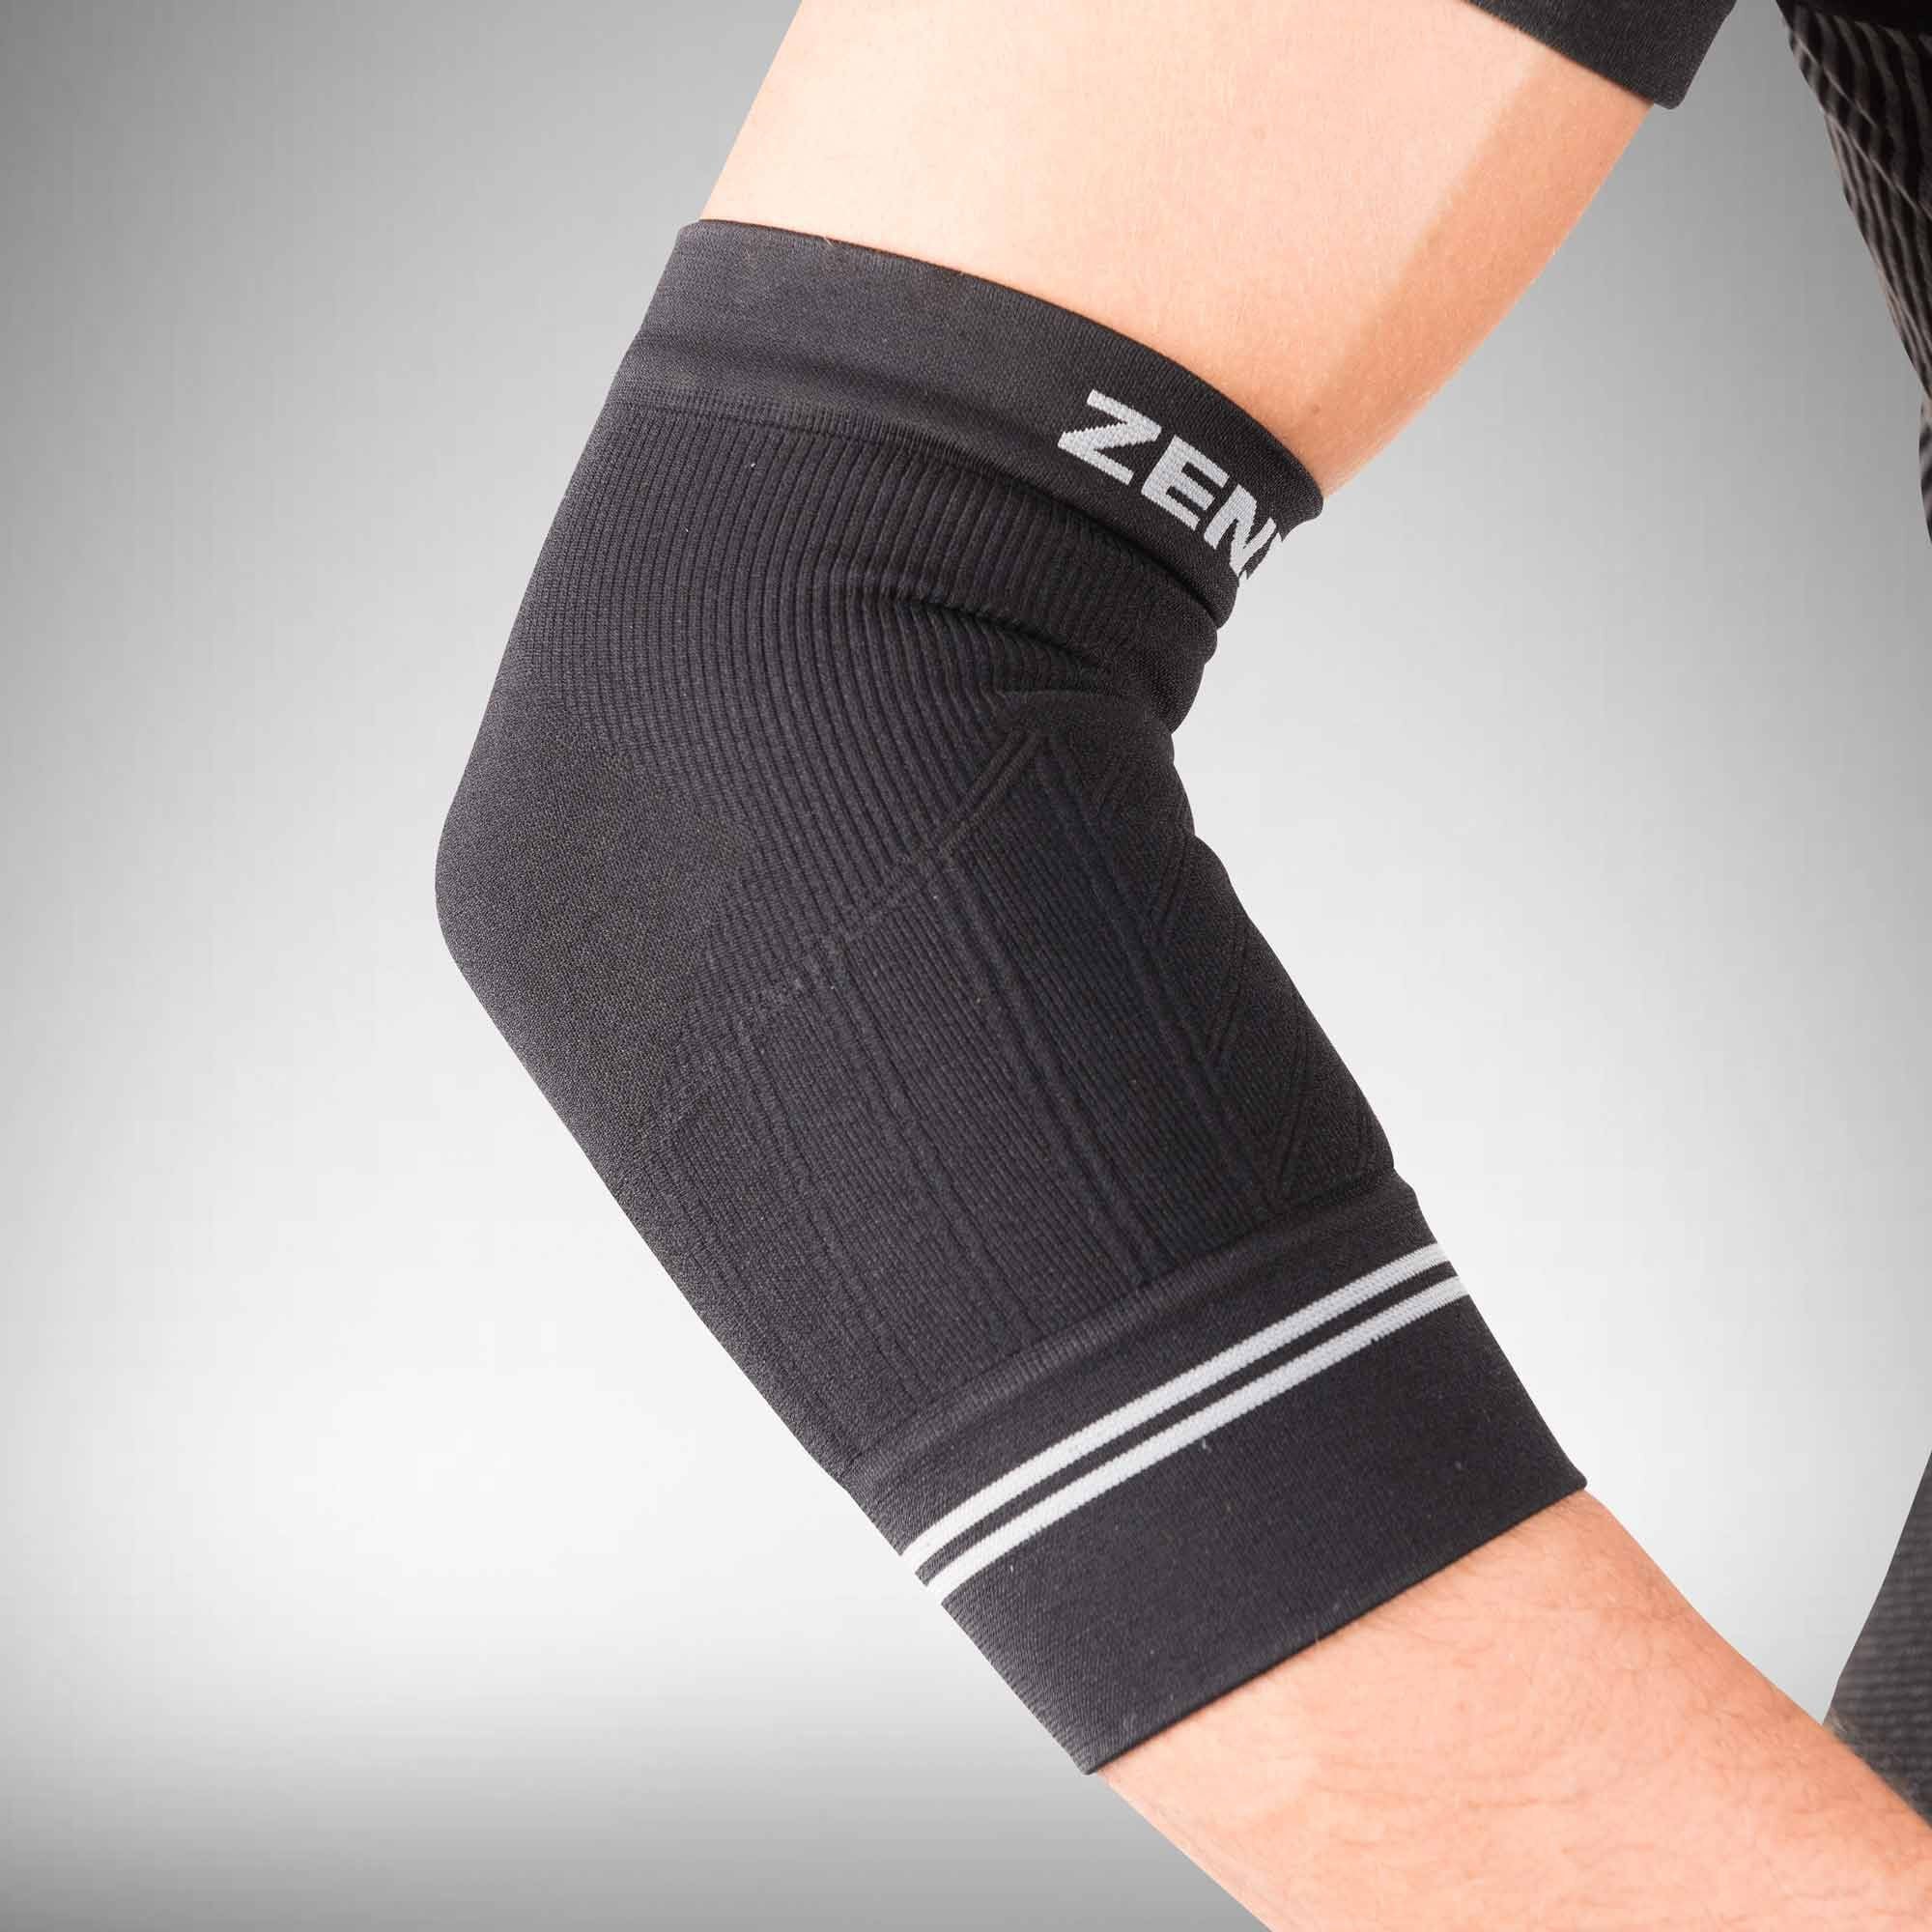 elbow compression sleeve canada